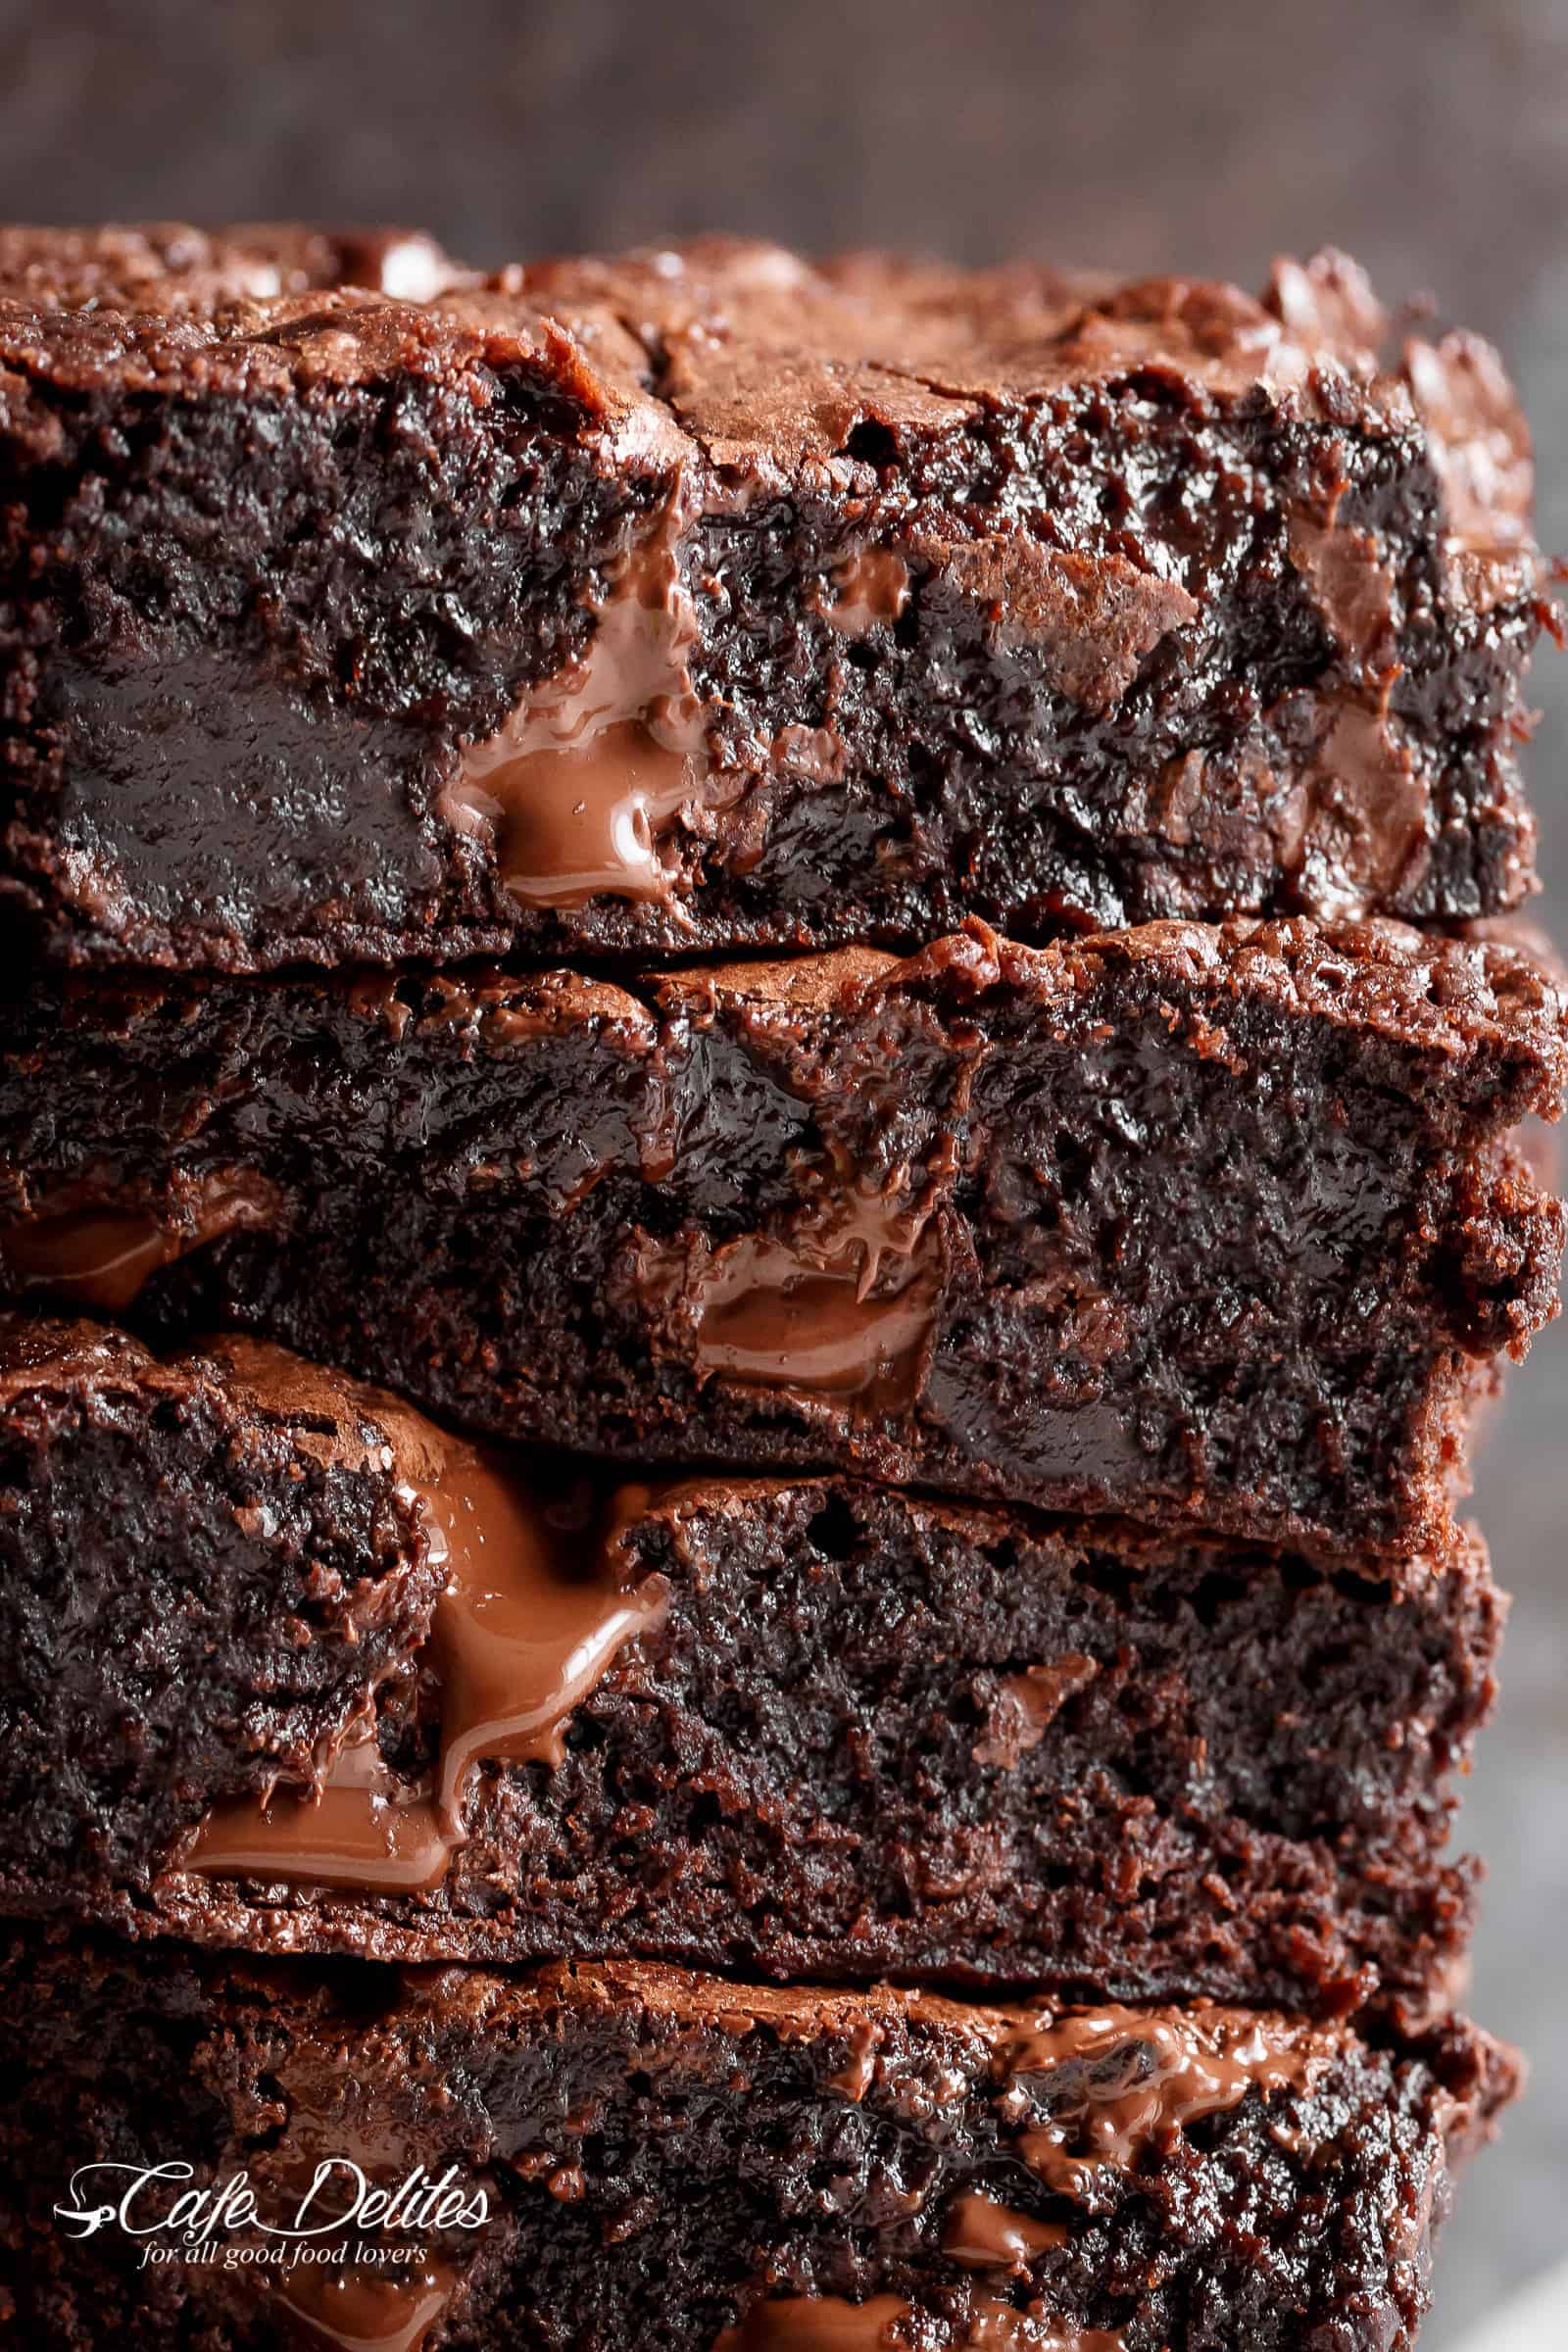 https://cafedelites.com/wp-content/uploads/2018/02/The-Best-Brownies-IMAGE-2.jpg